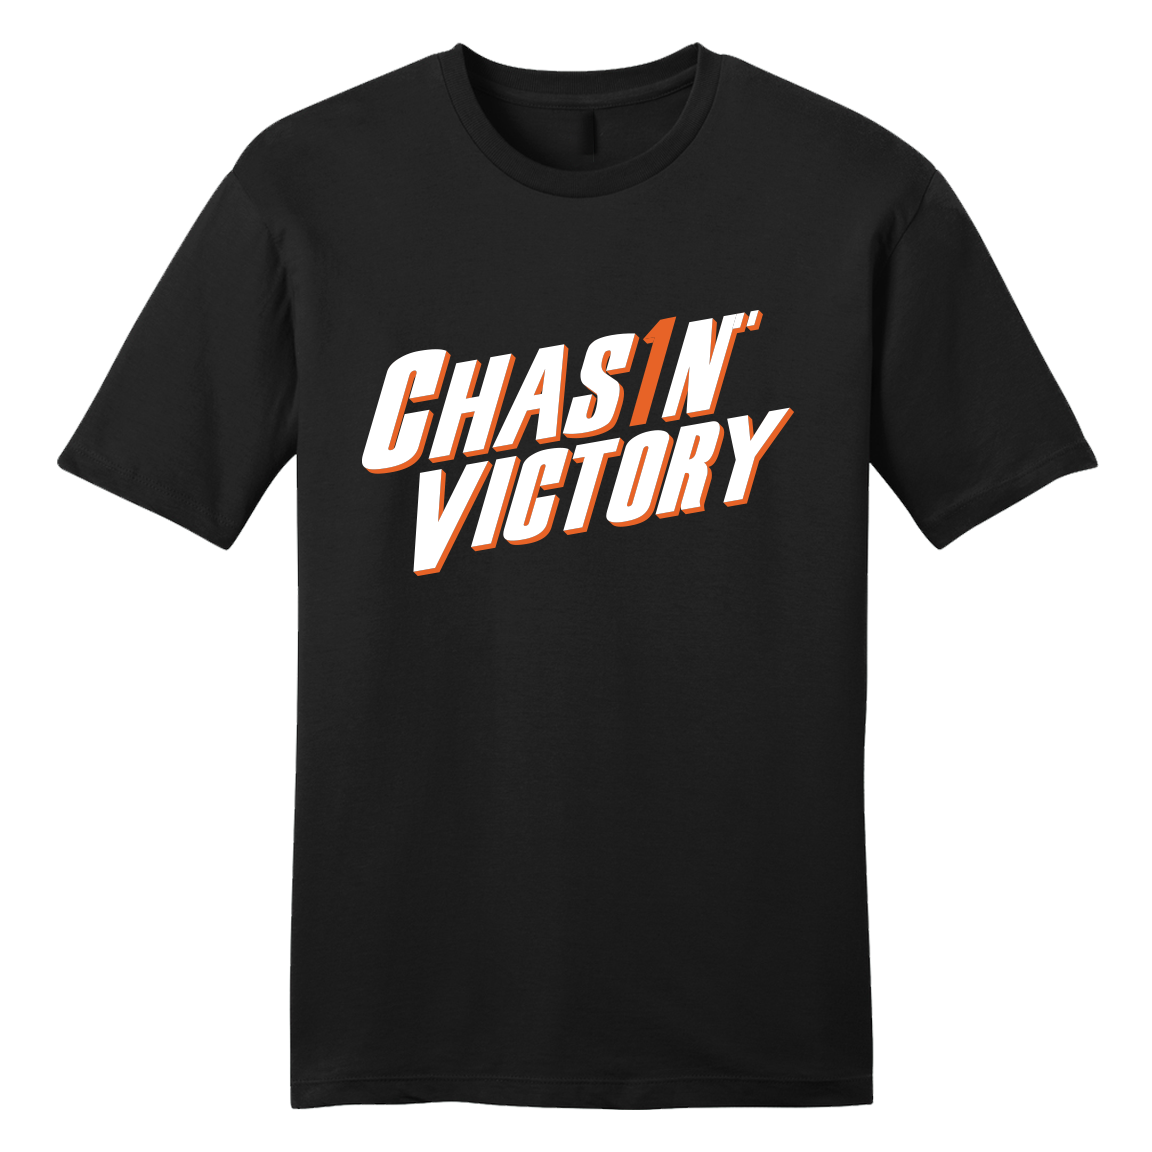 Chasin' Victory - Cincy Shirts